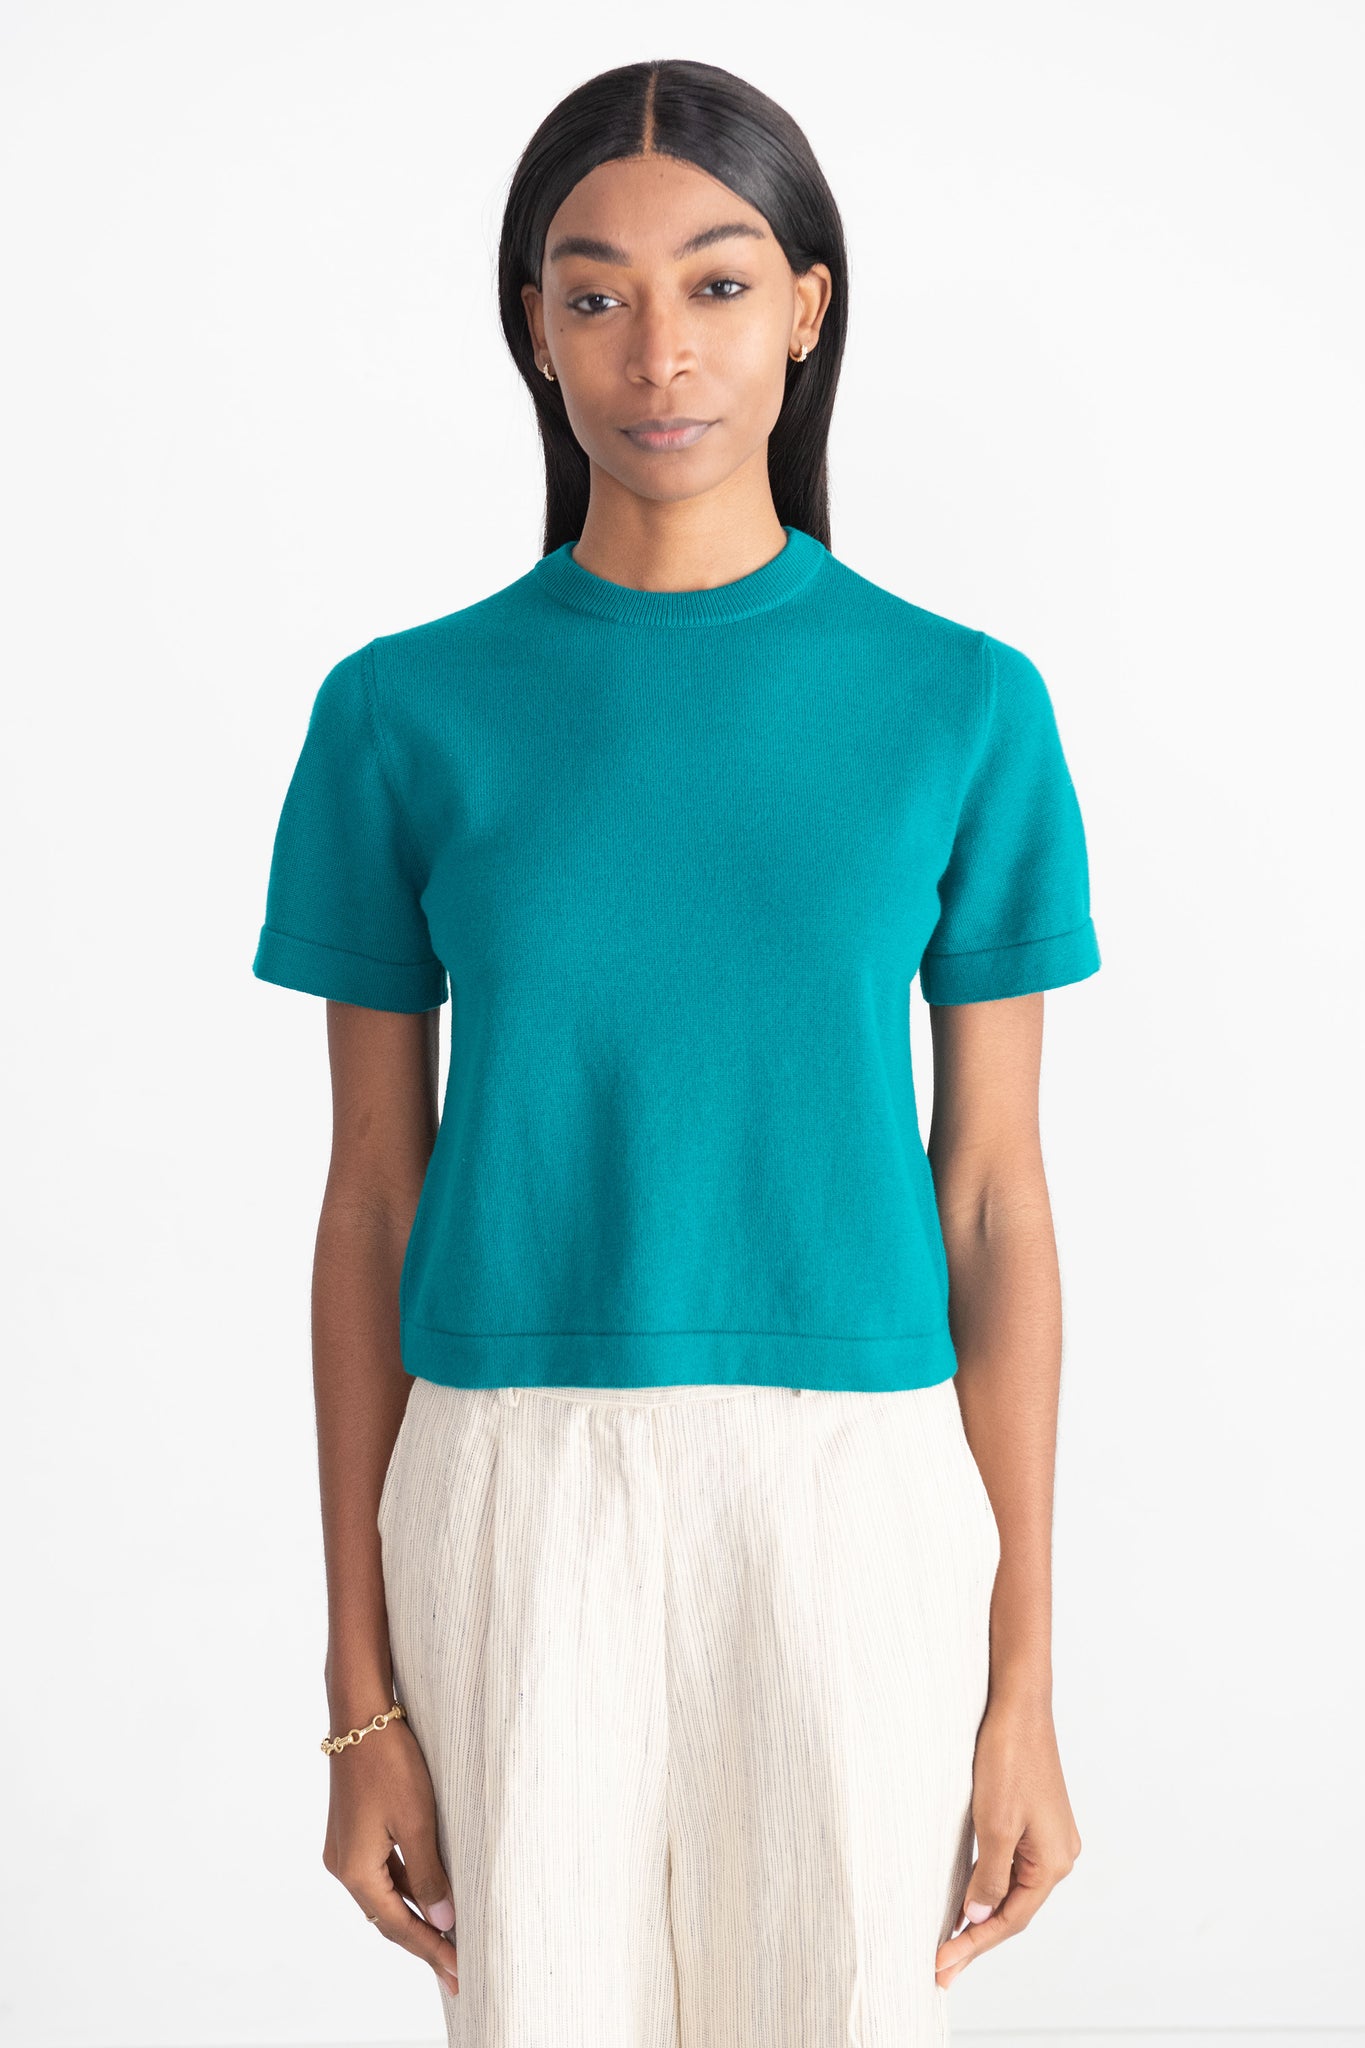 CORDERA - Merino Wool T-shirt, Teal